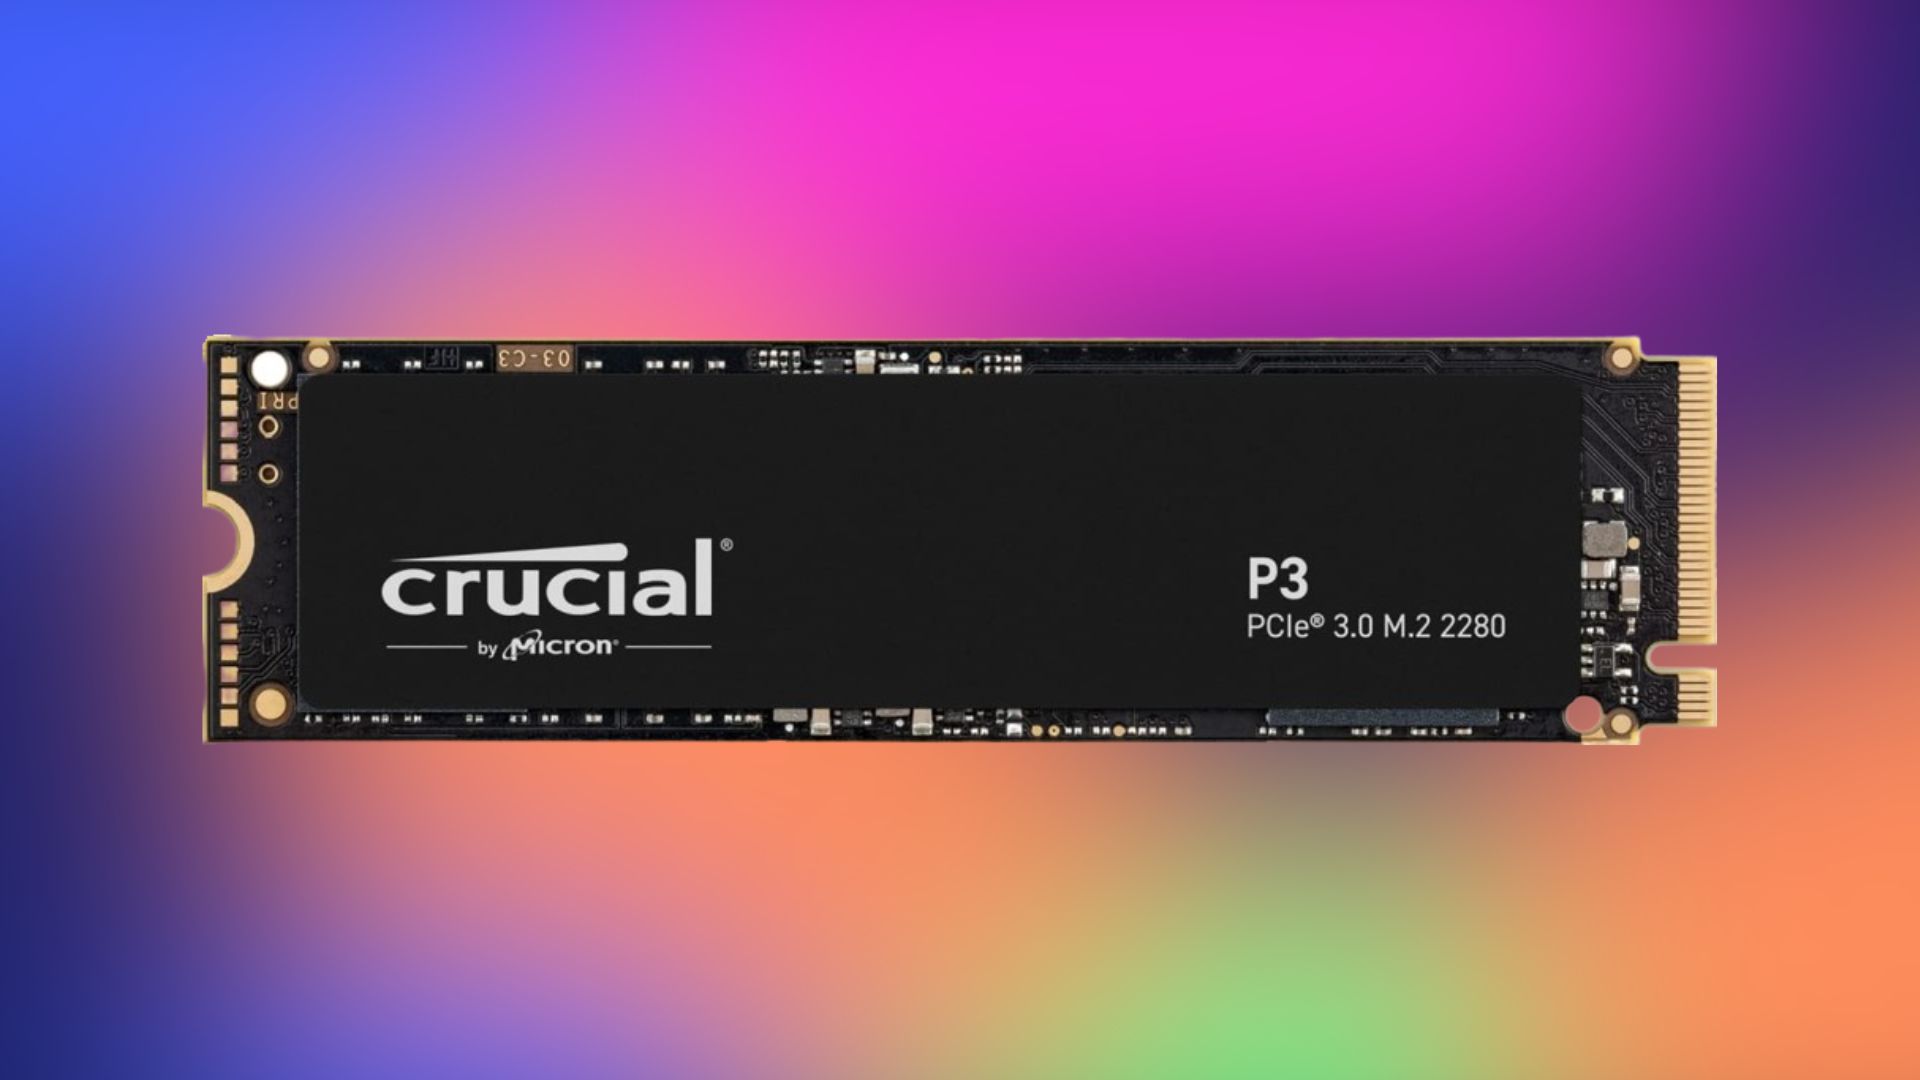 Crucial P5 Plus 2 To (avec dissipateur) - SSD - Top Achat